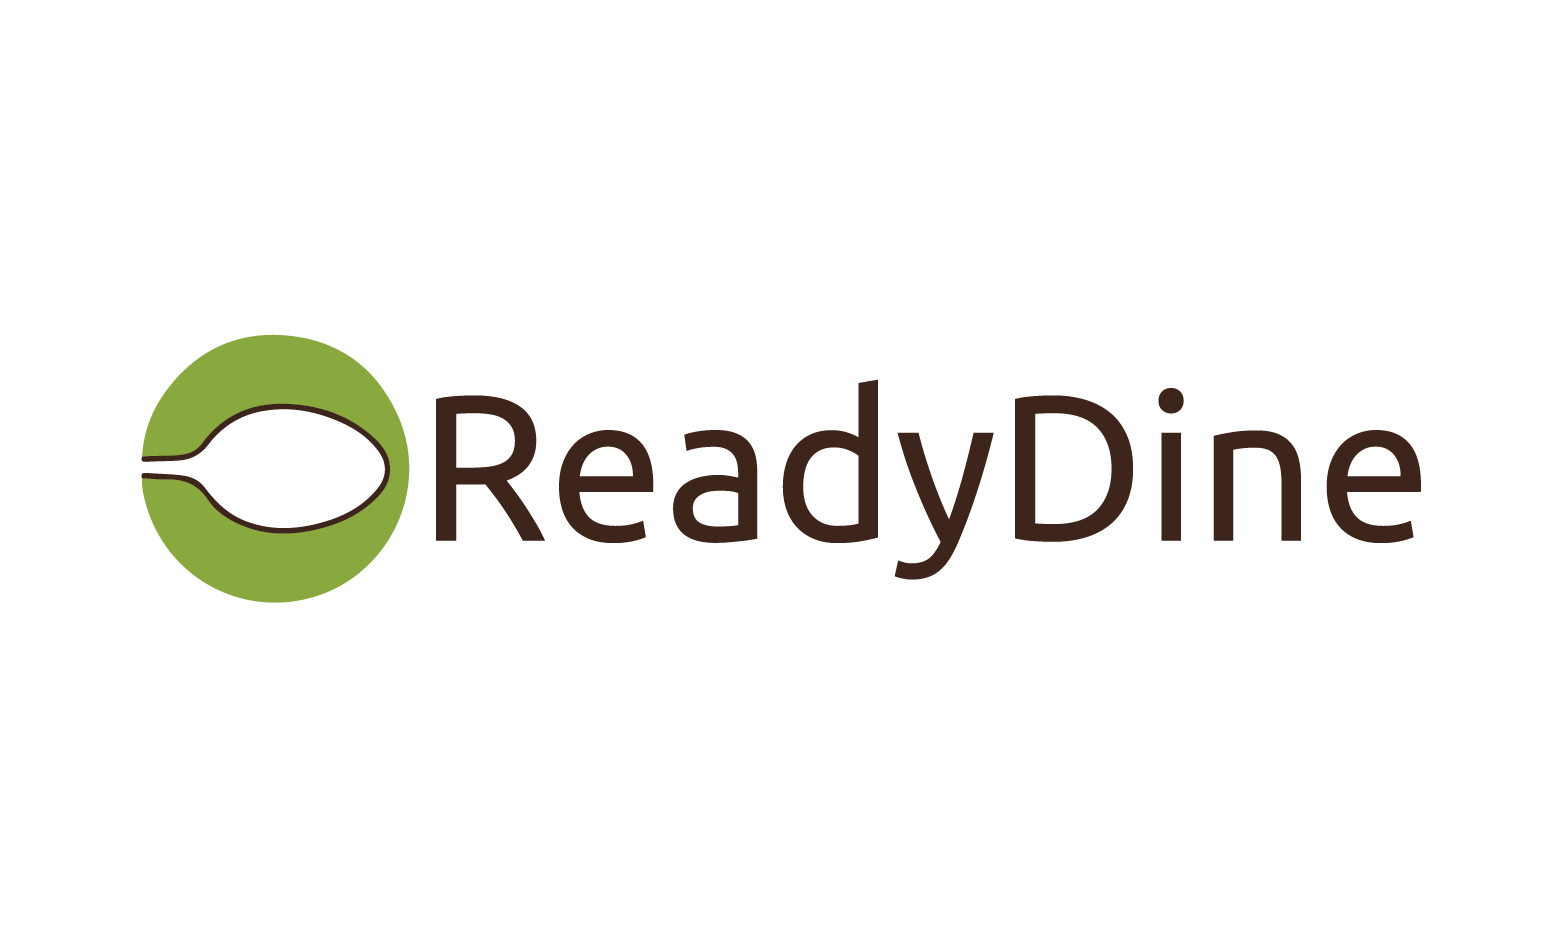 ReadyDine.com - Creative brandable domain for sale